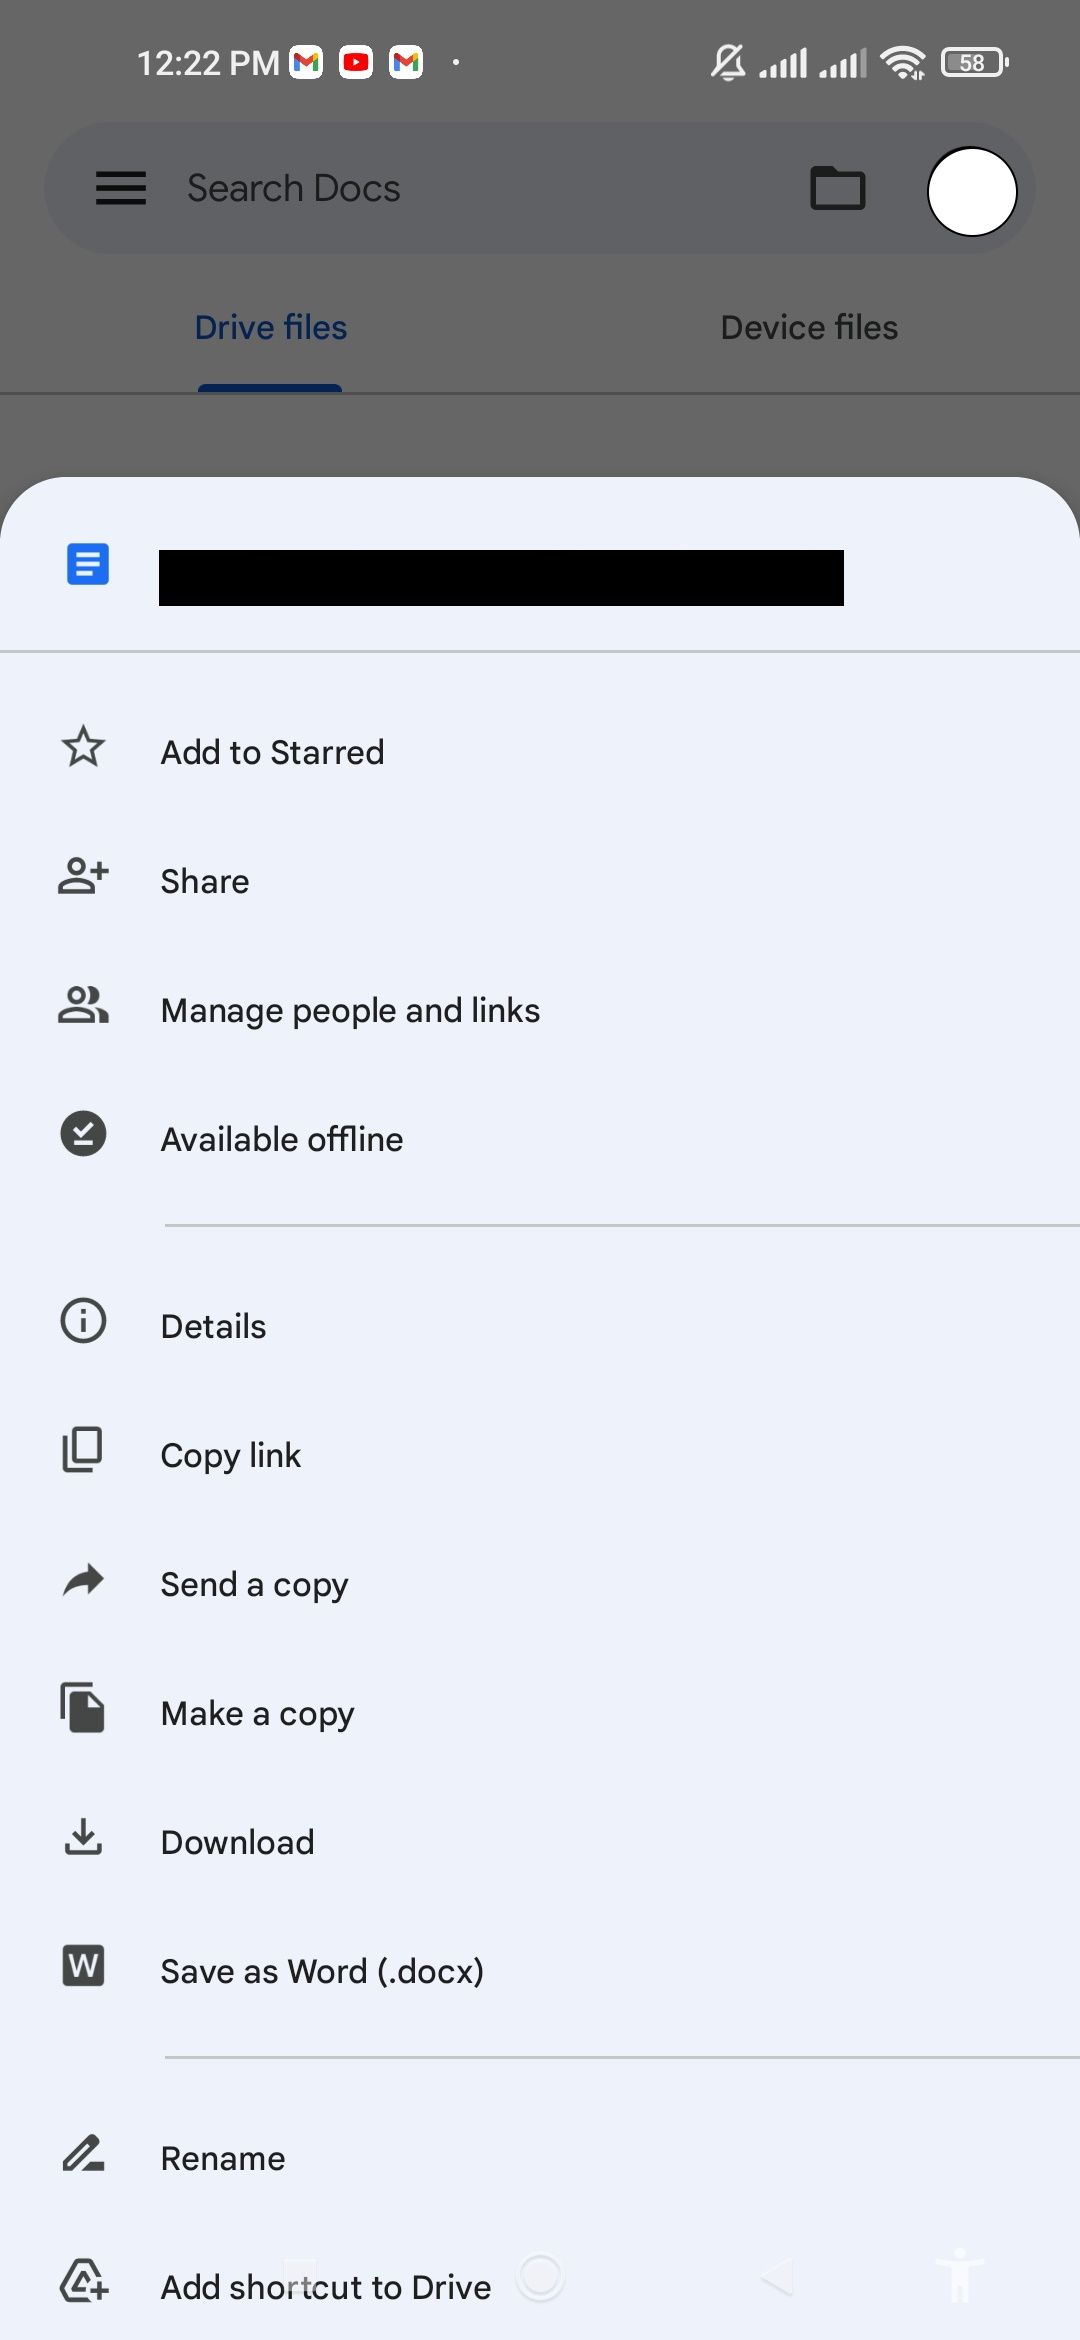 Google Docs menu on mobile app